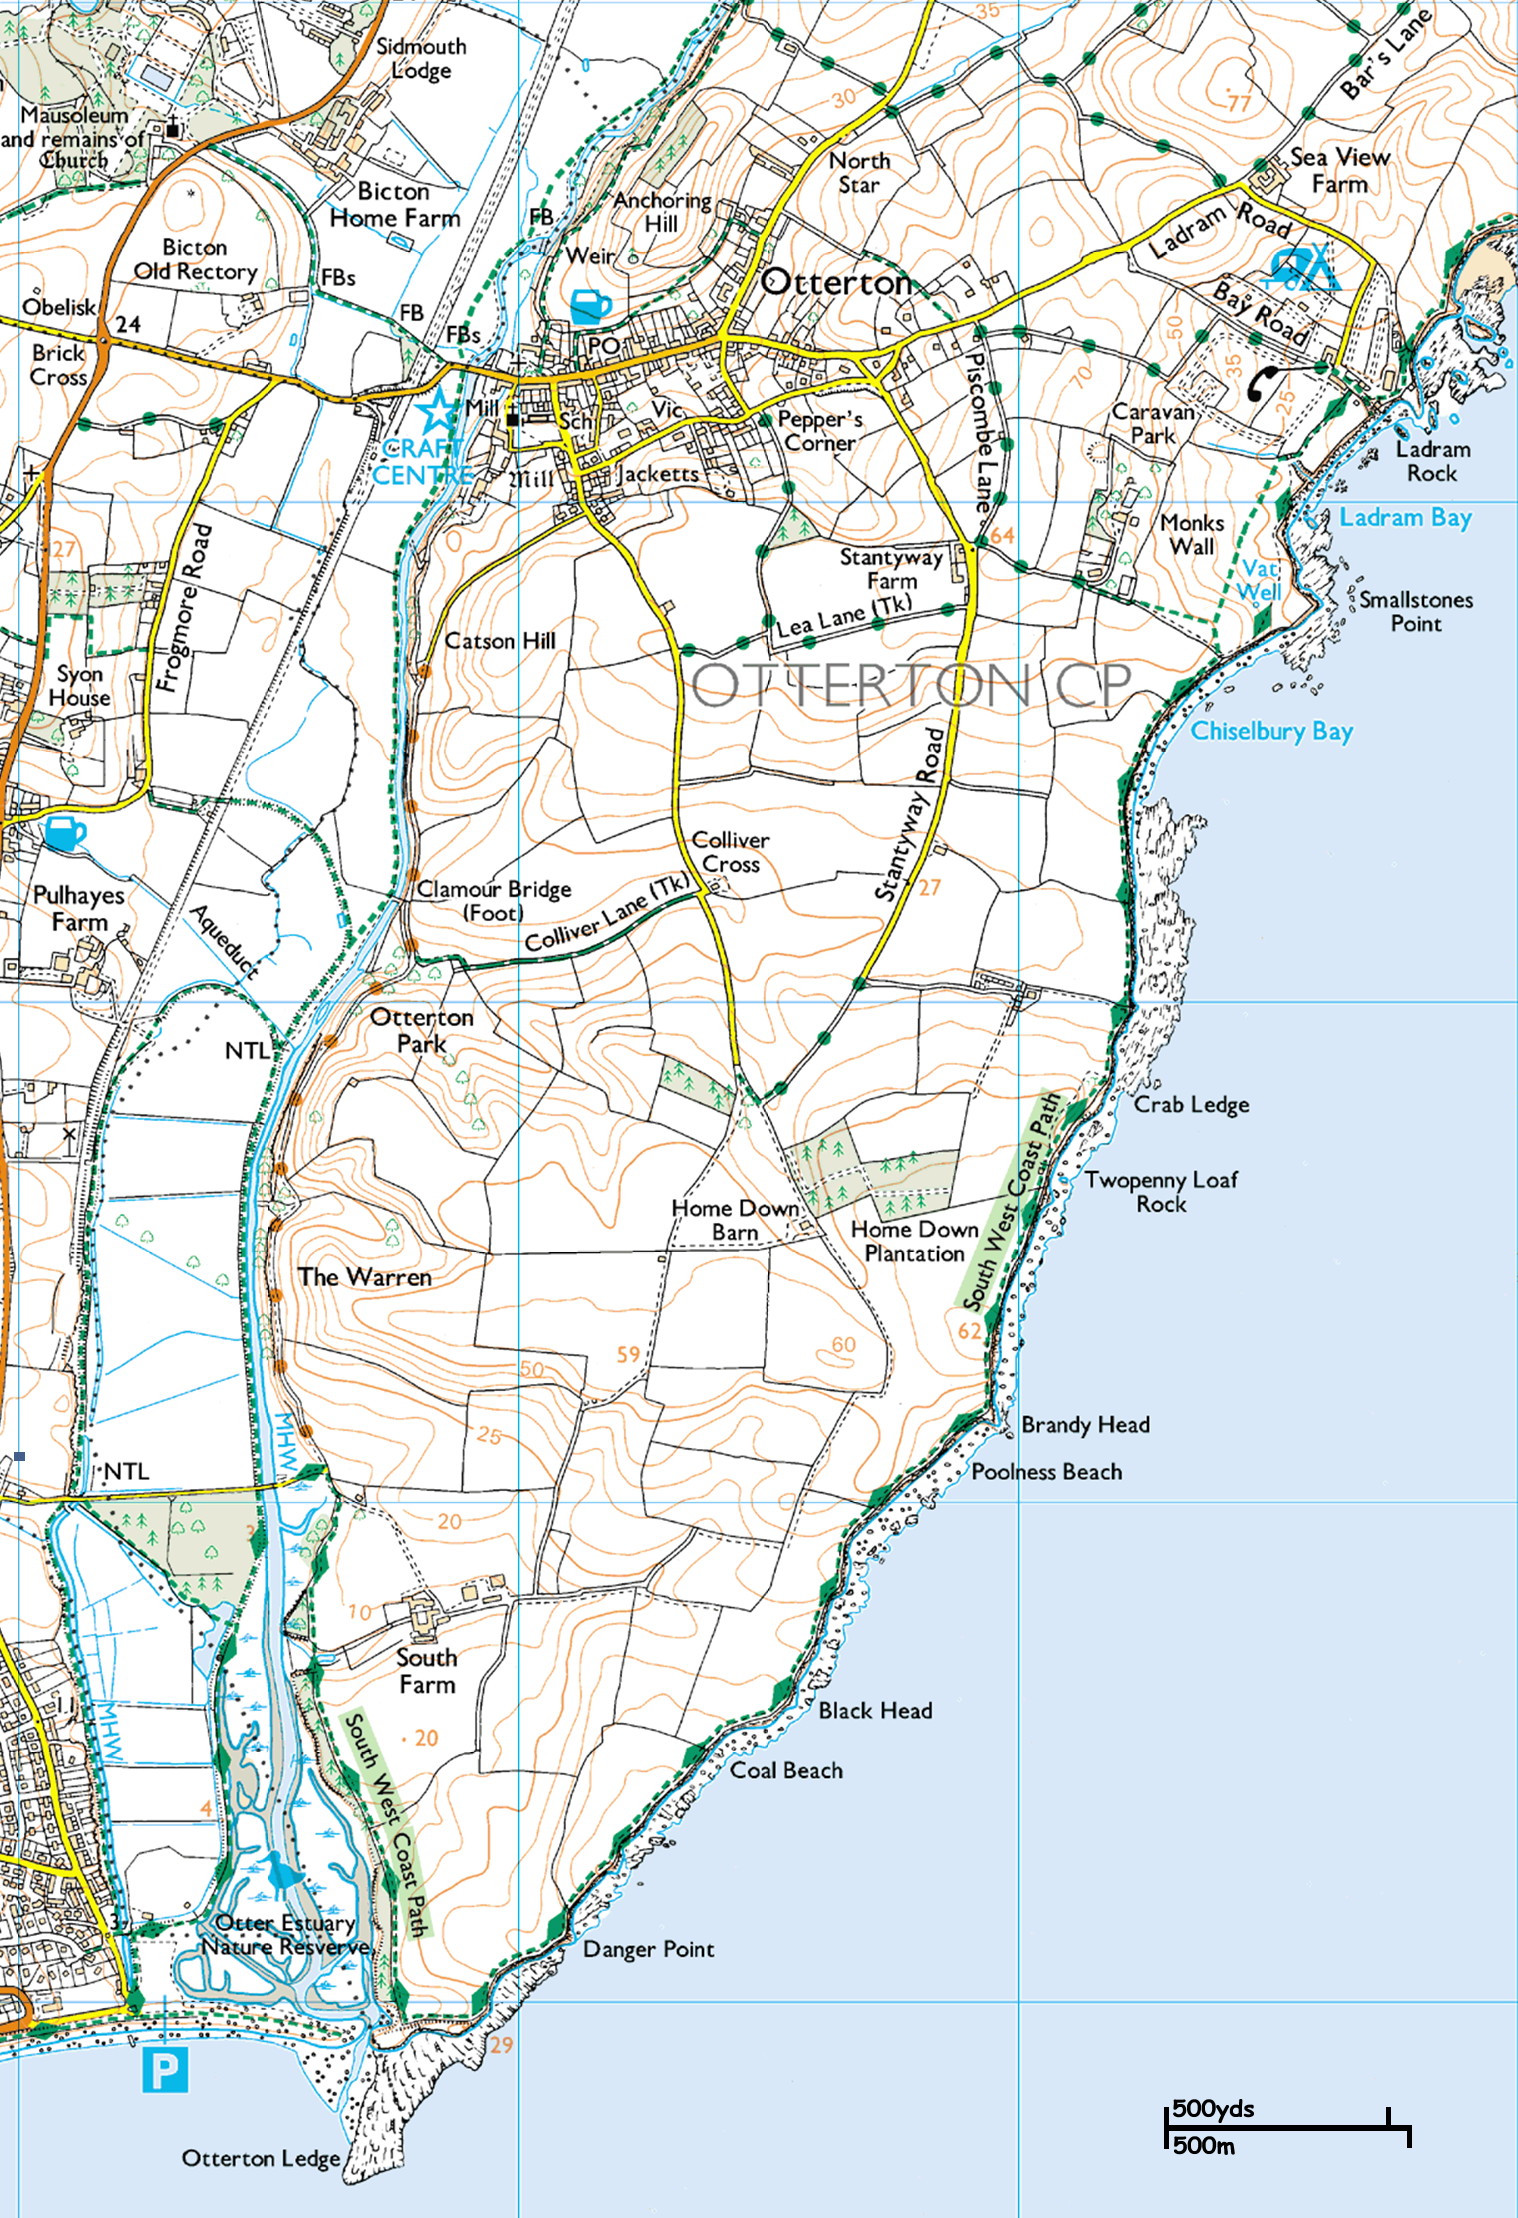 Ordnance Survey map of the area around Otterton